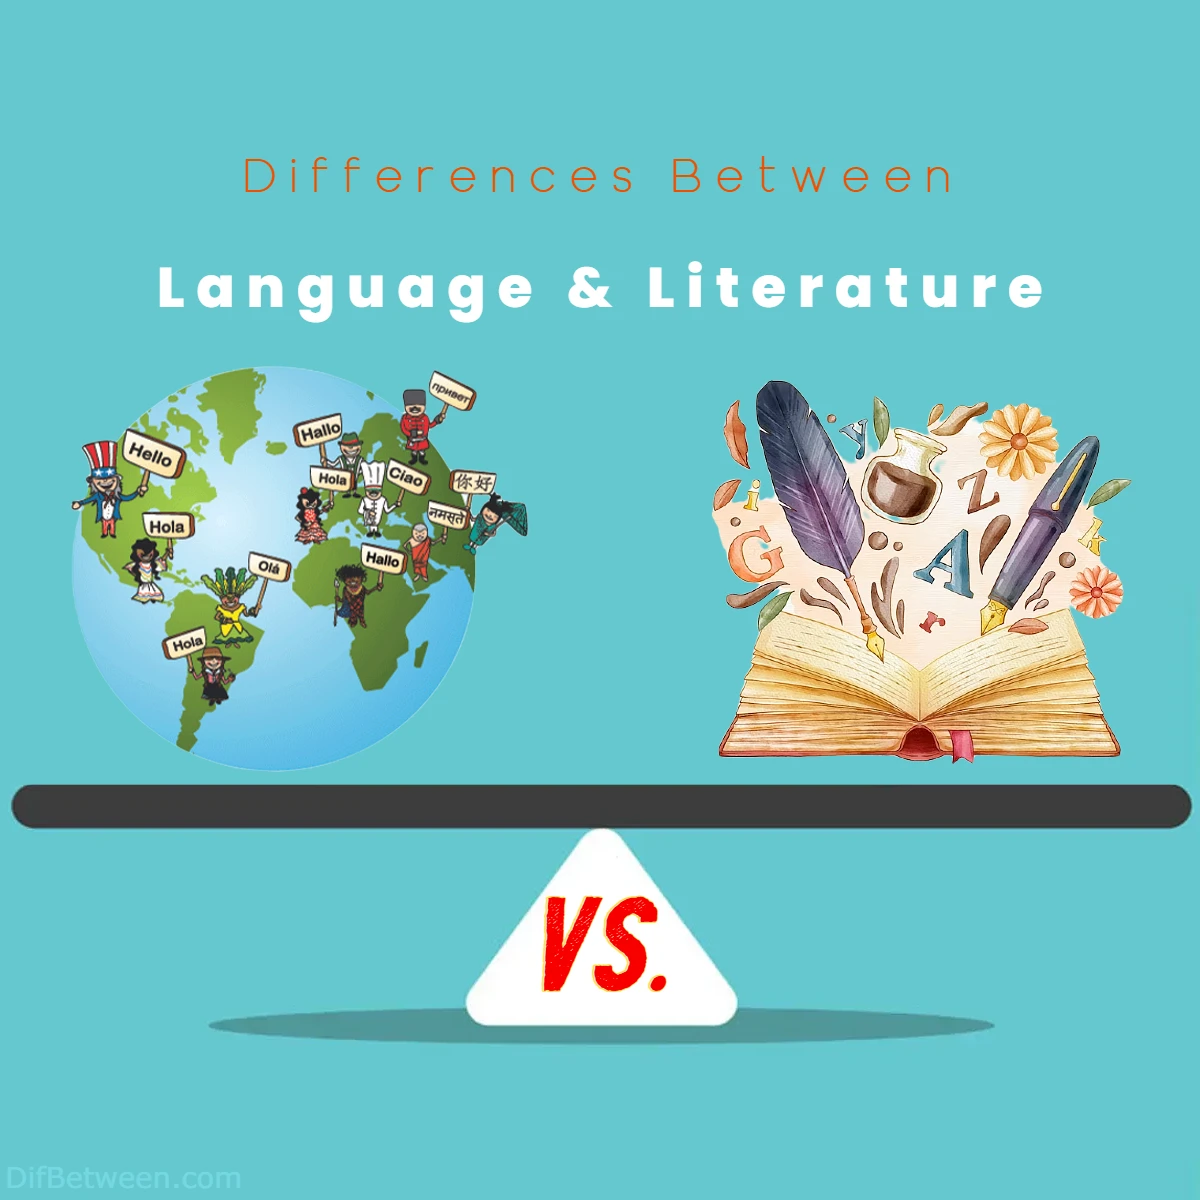 Differences Between Language vs Literature